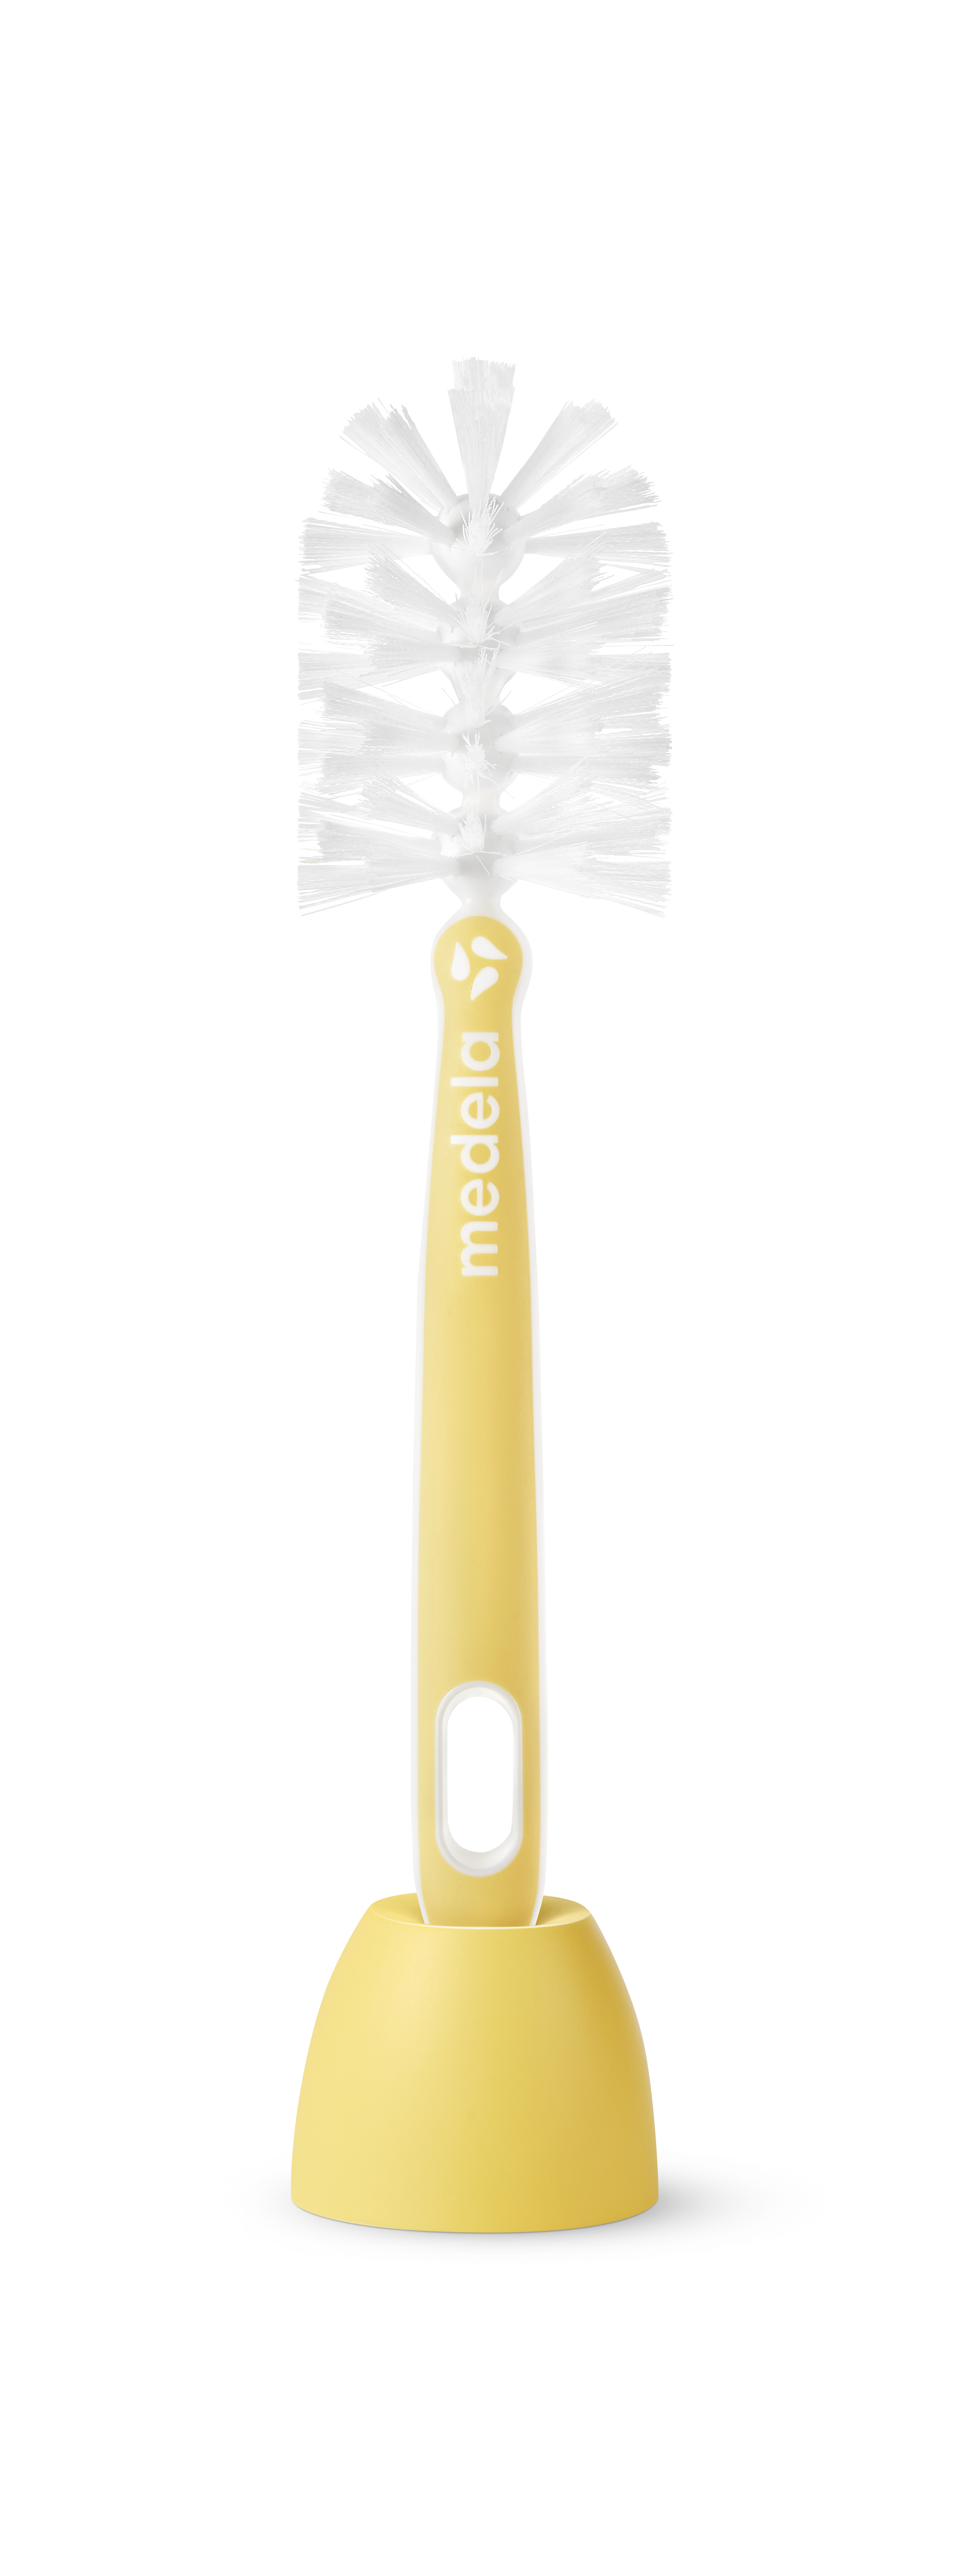 Medela Quick Clean™ Bottle Brush